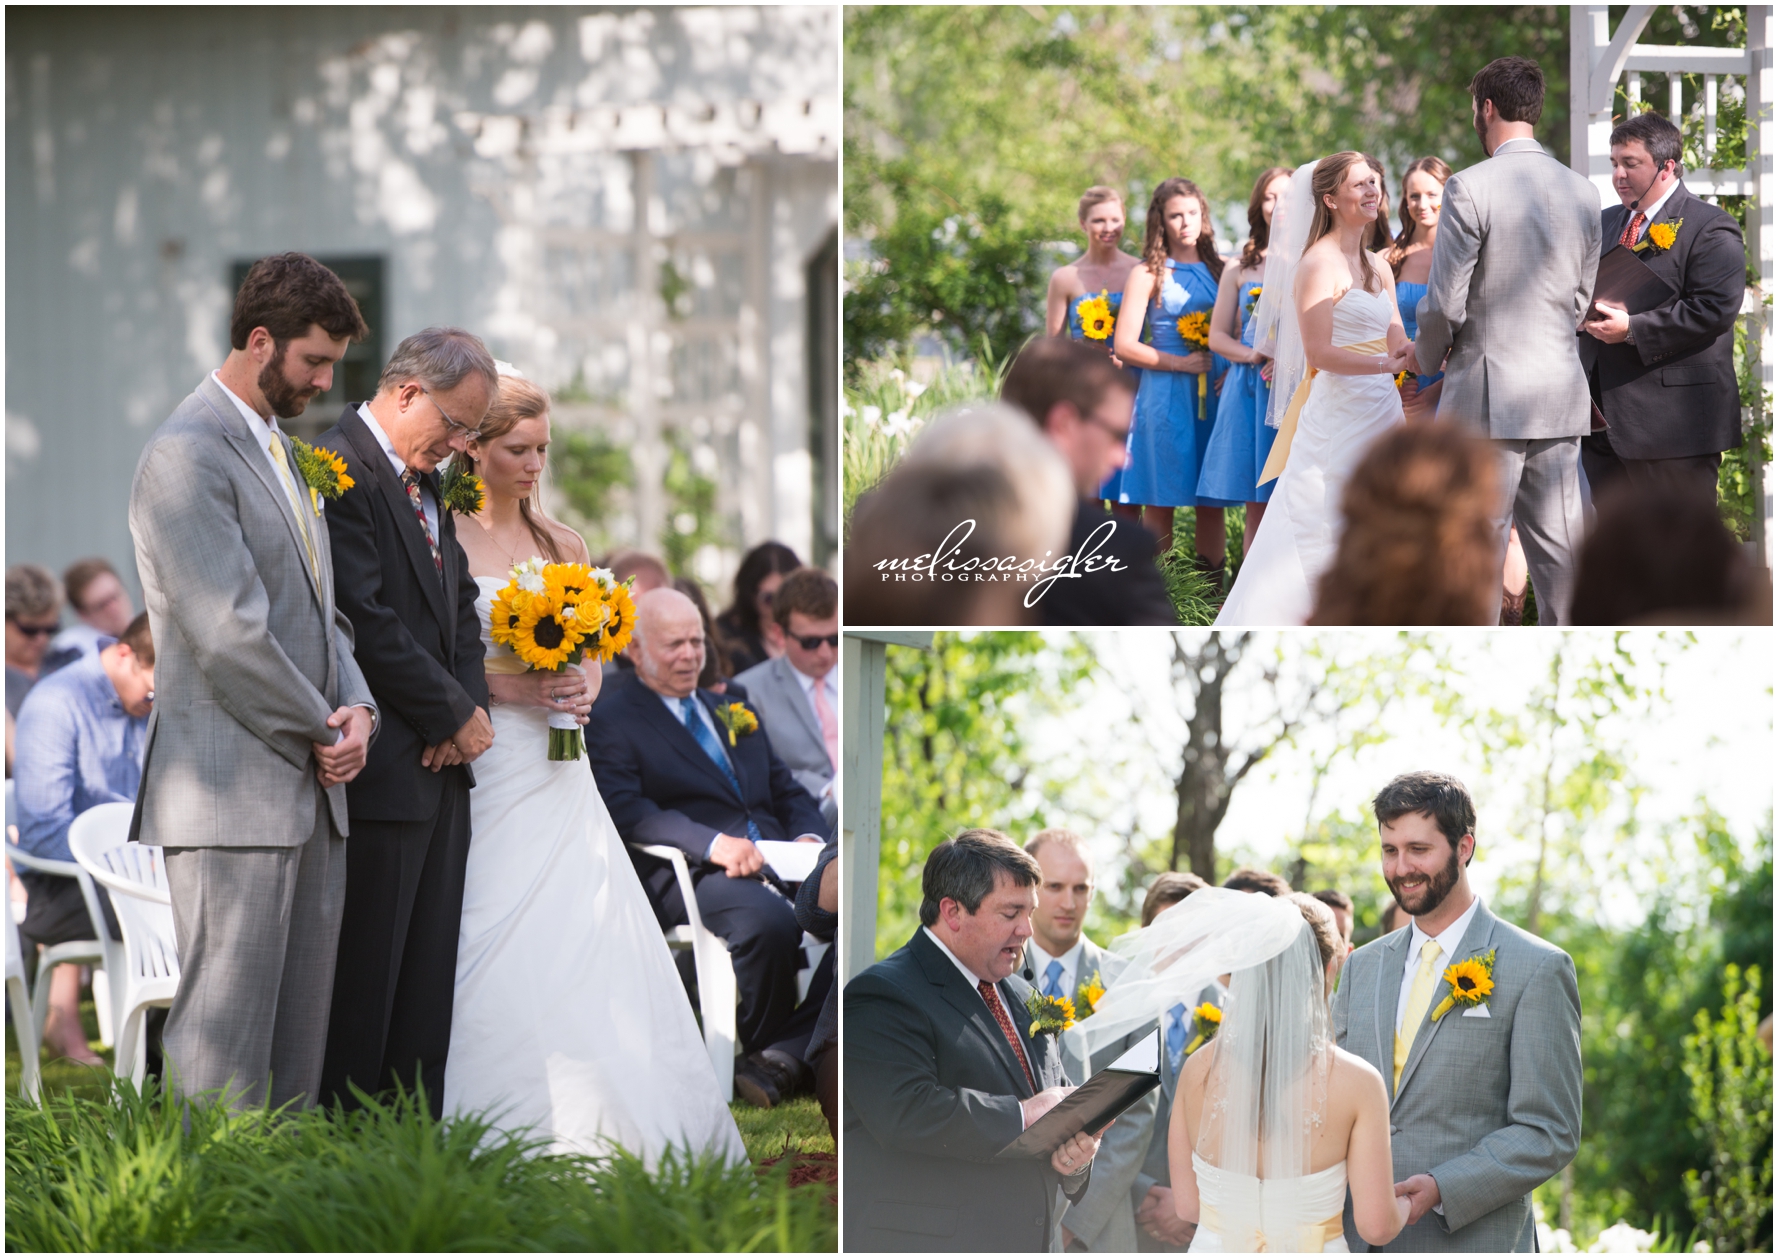 Outdoor wedding ceremony at Victorian Veranda by Lawrence Kansas wedding photographer Melissa Sigler